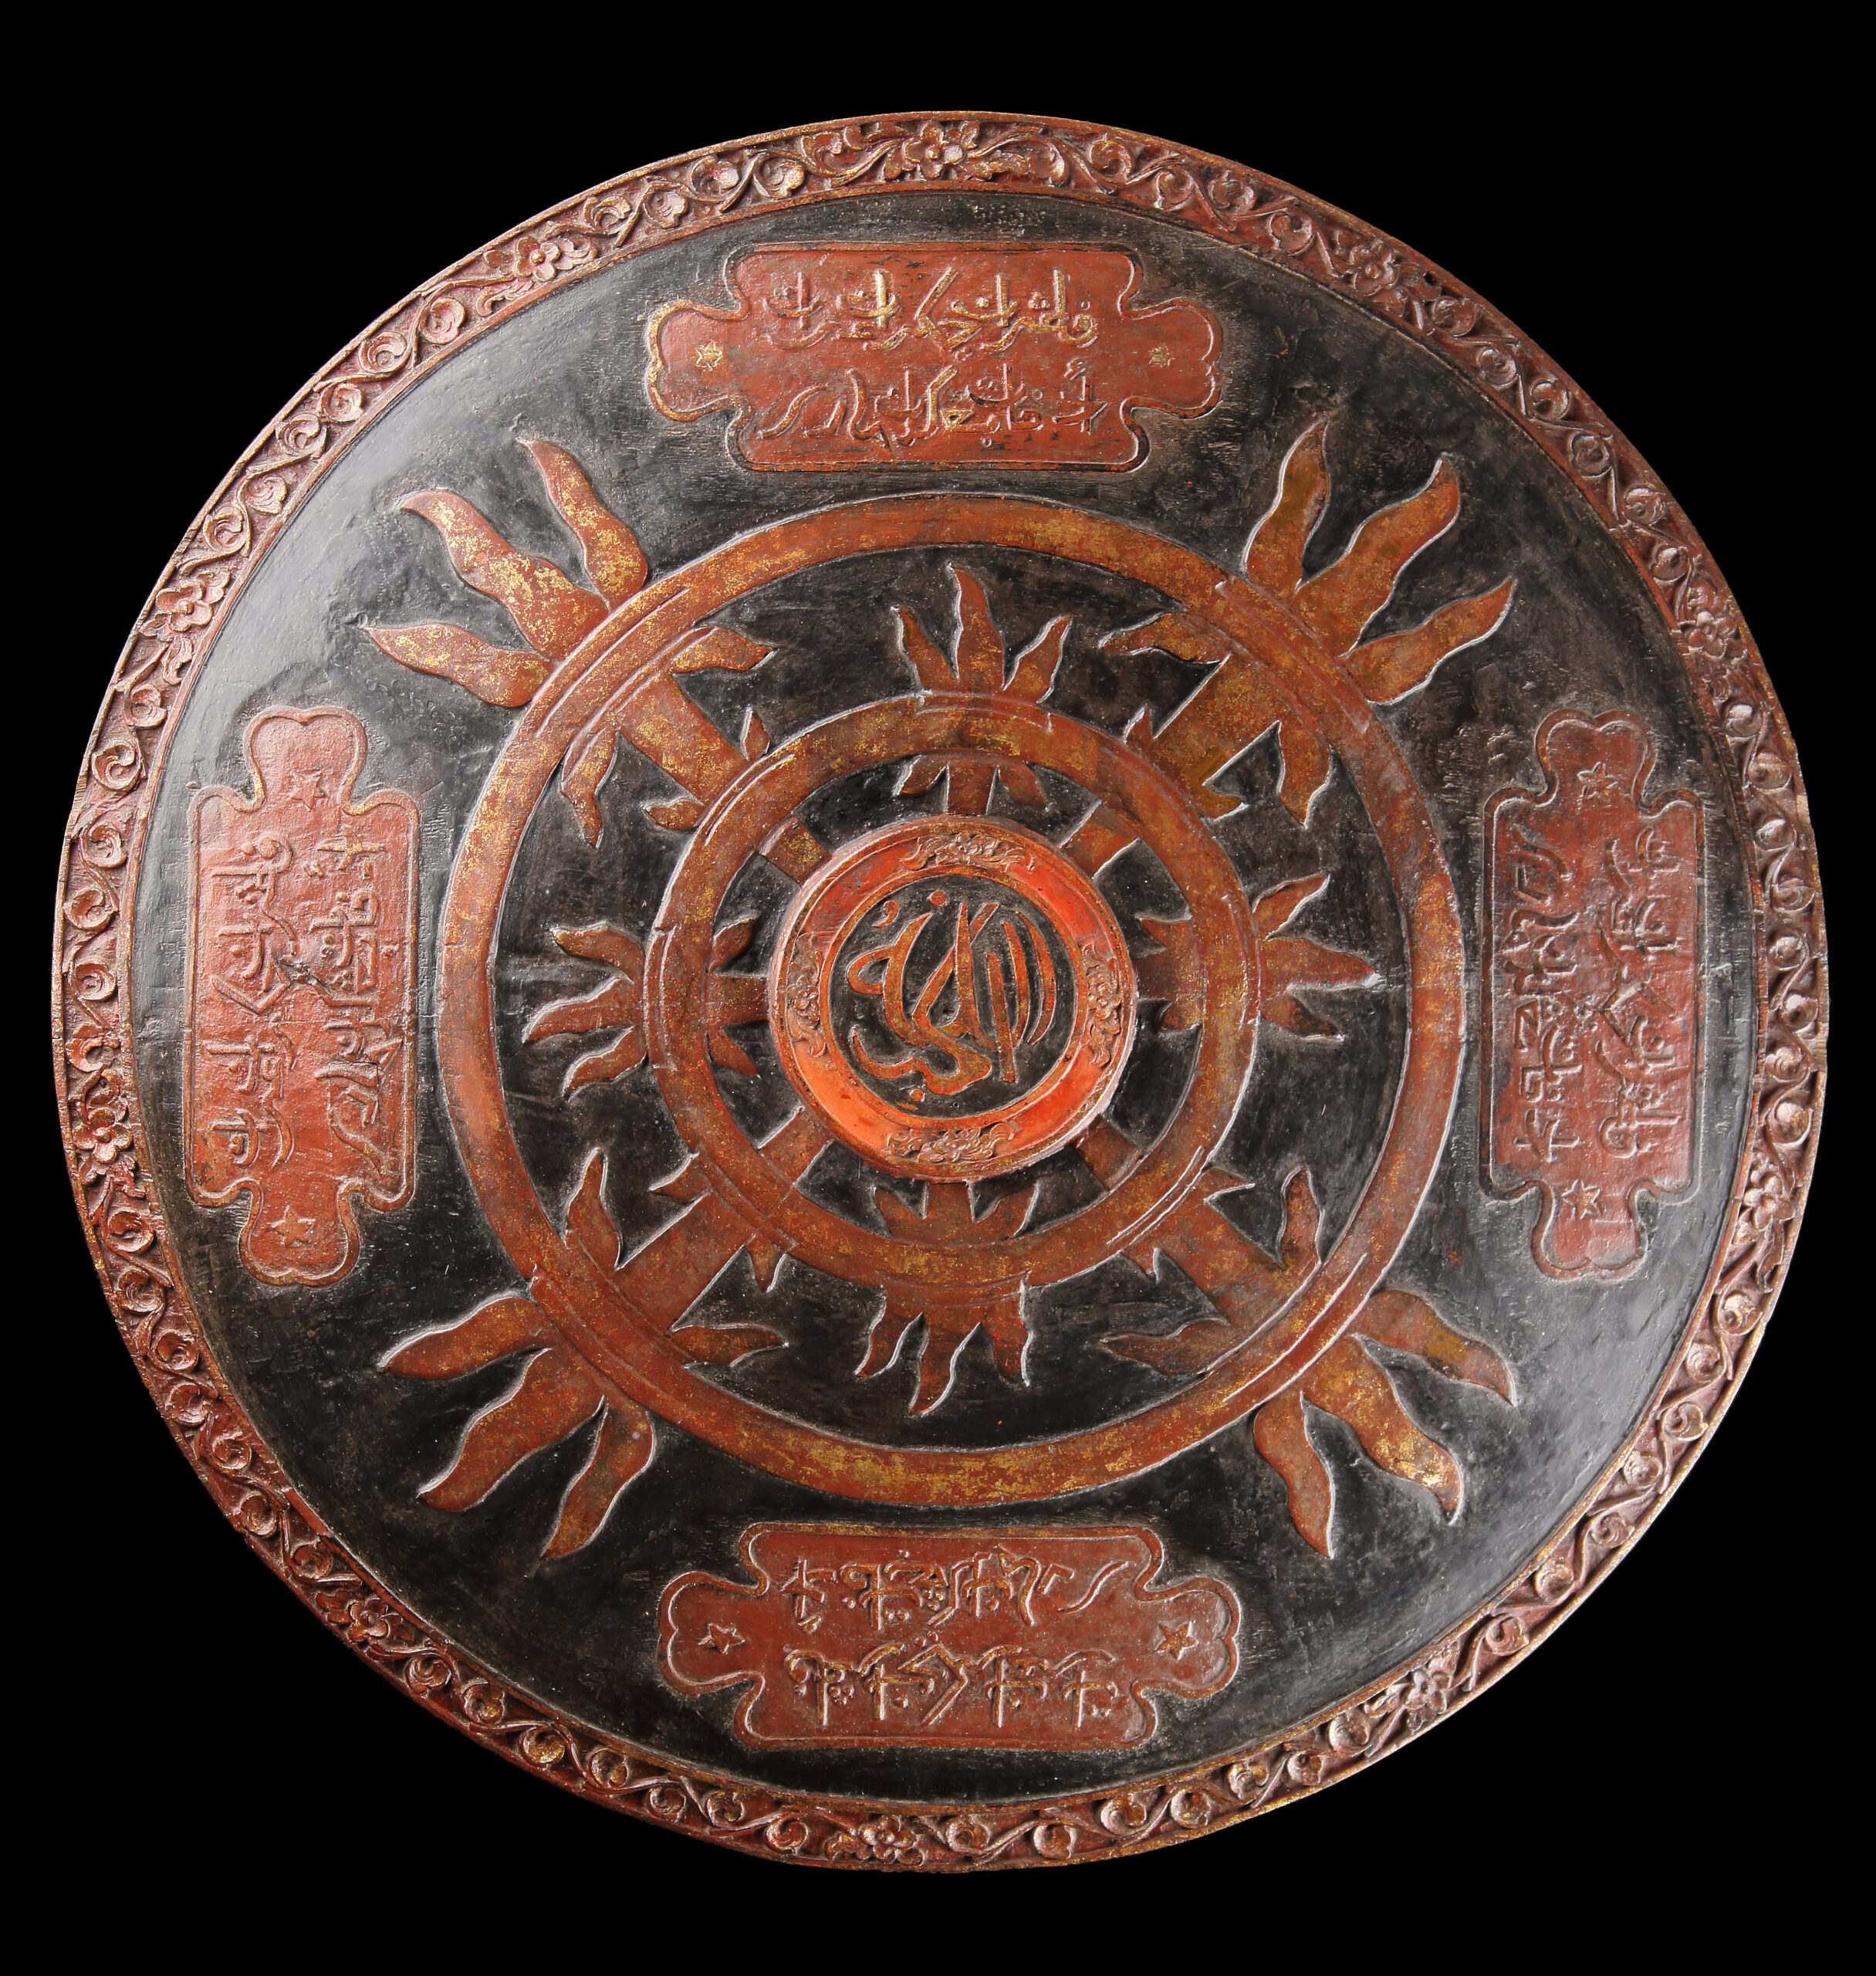 Ritual Dance Shield